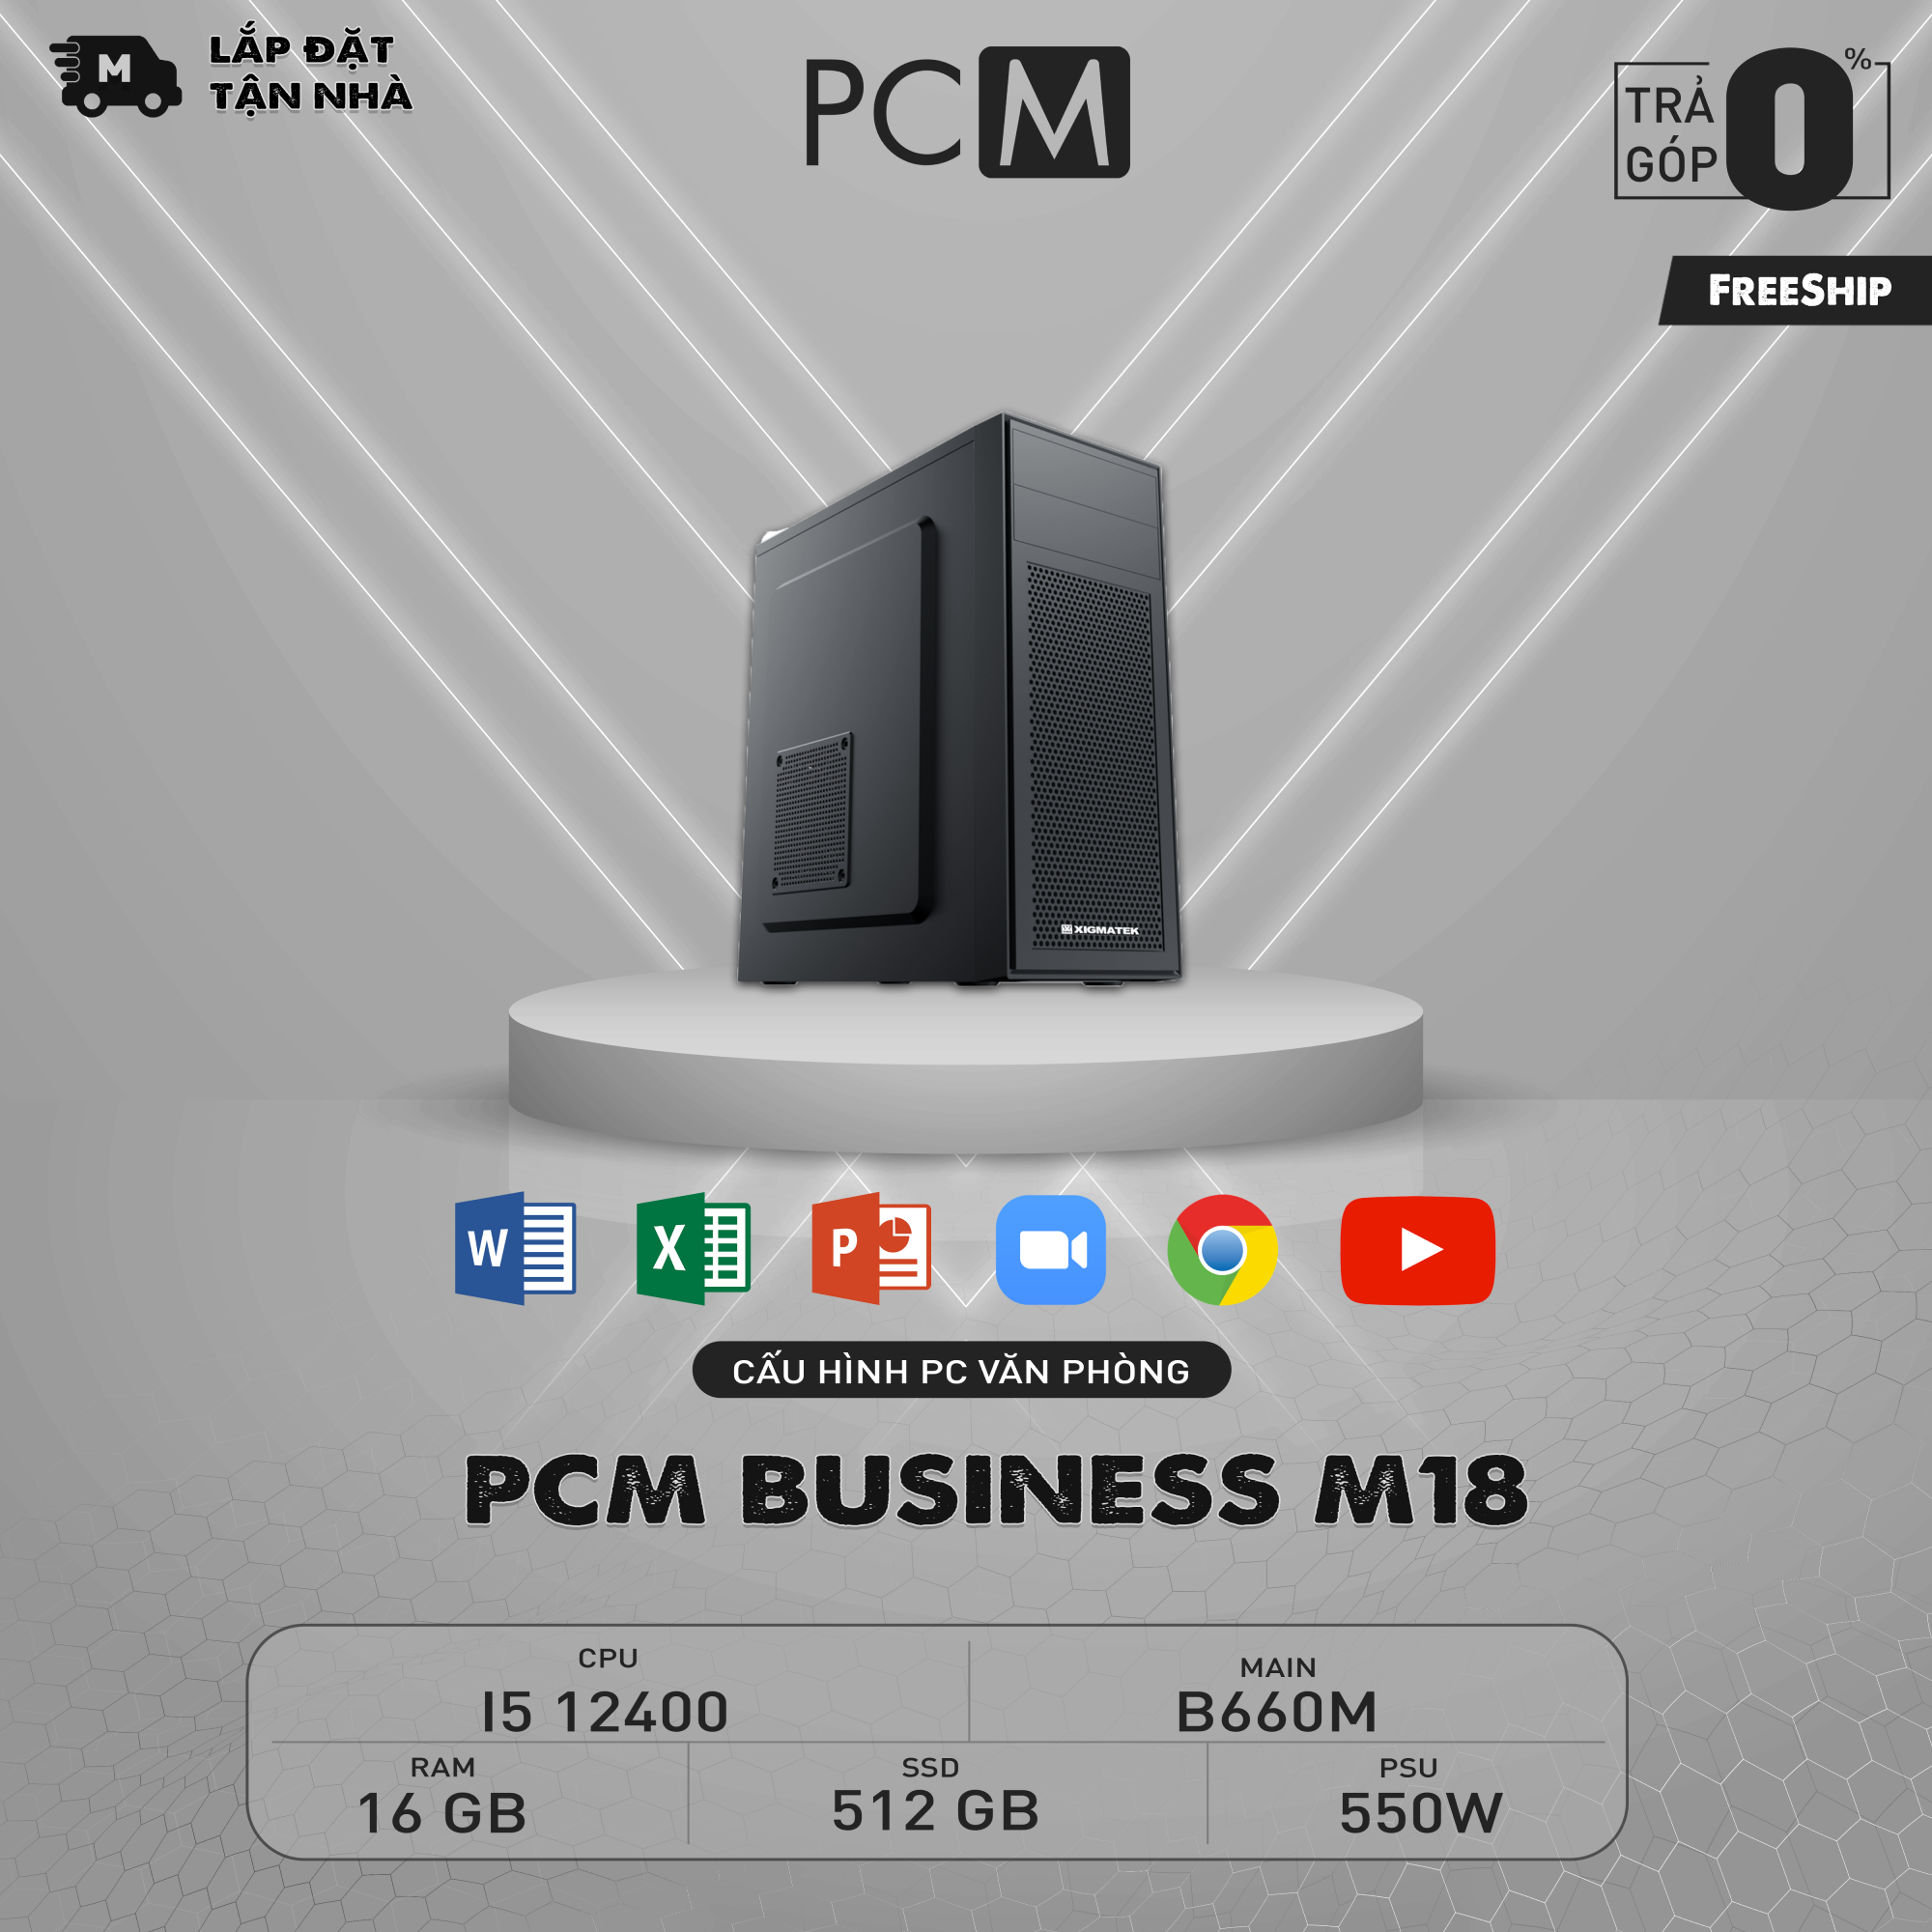 PCM BUSINESS M18 (I5 12400/16GB RAM/512GB SSD)